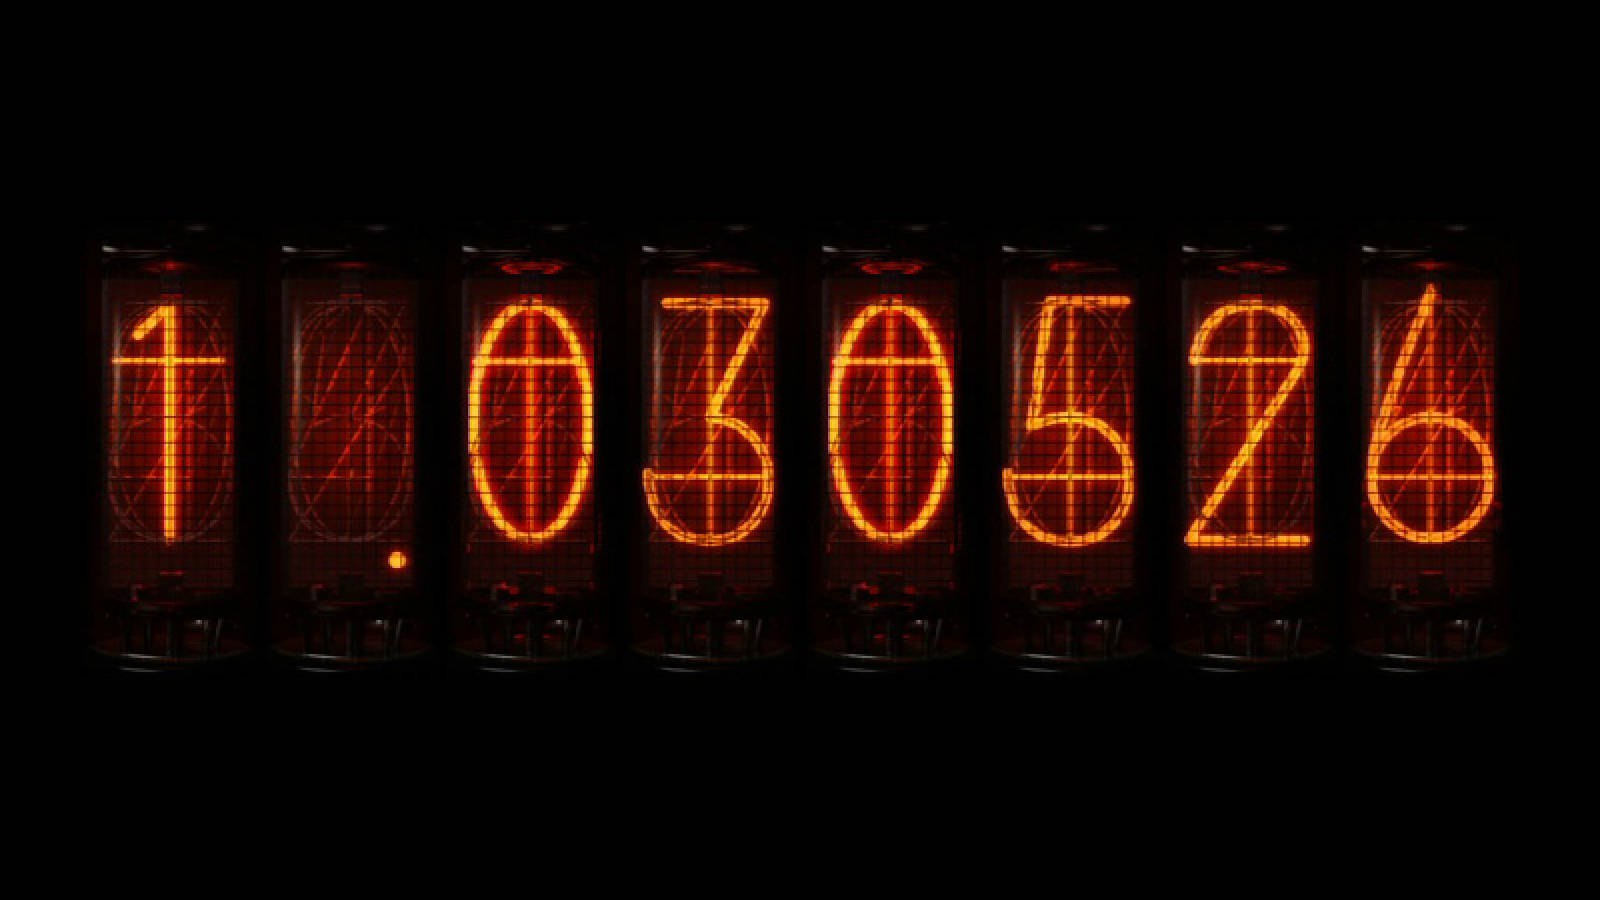 Steins Gate Digital Countdown Timer